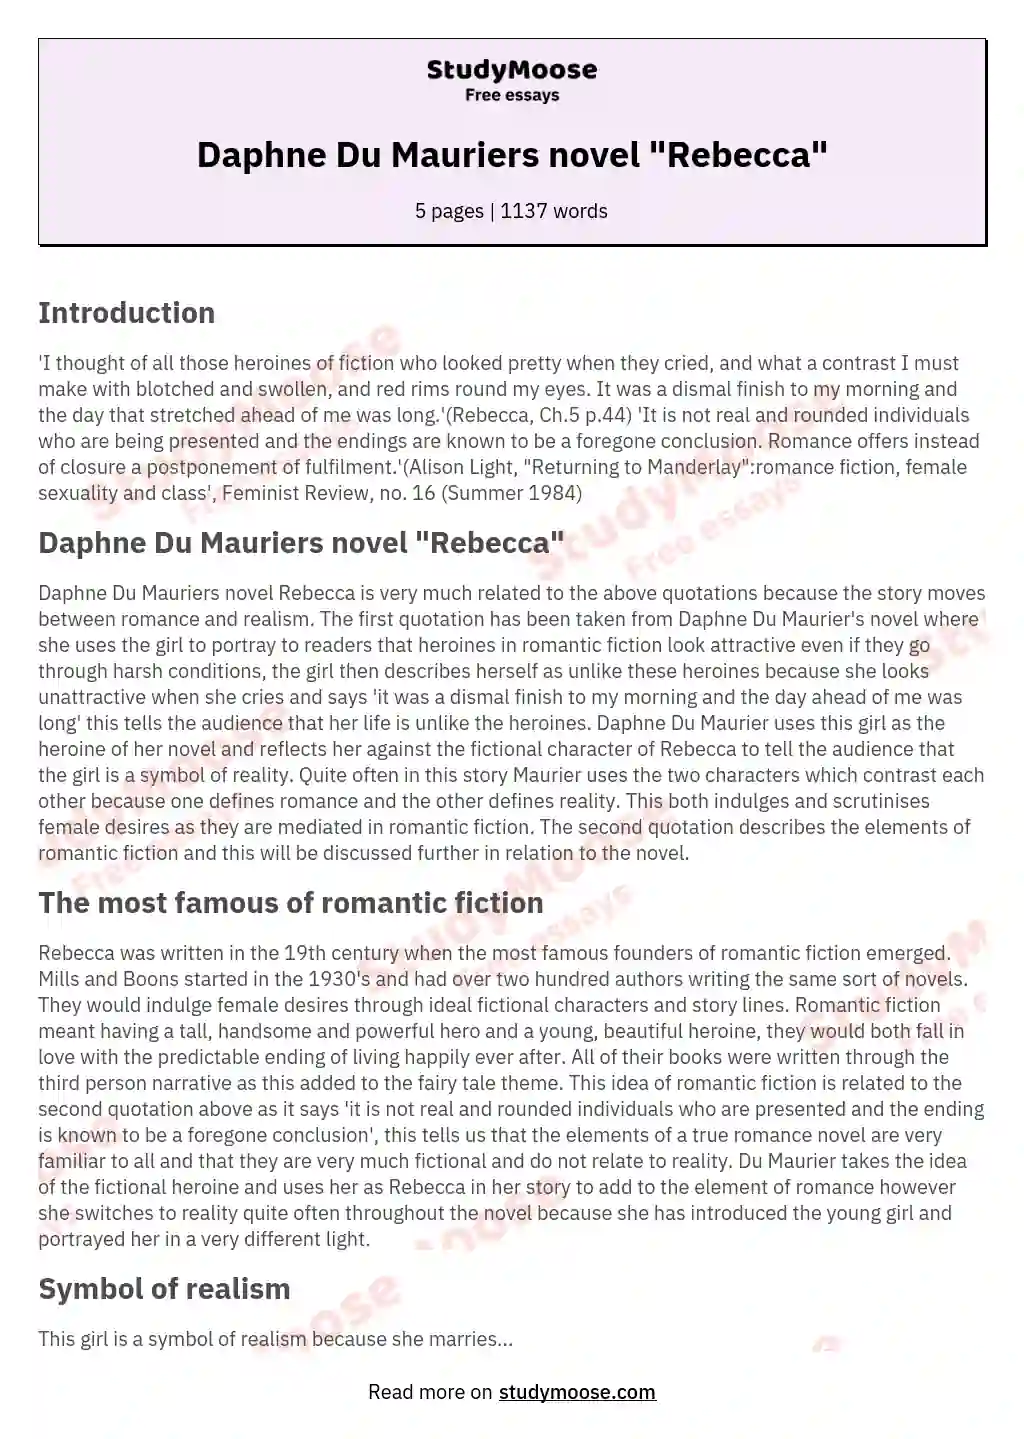 Daphne Du Mauriers novel "Rebecca" essay